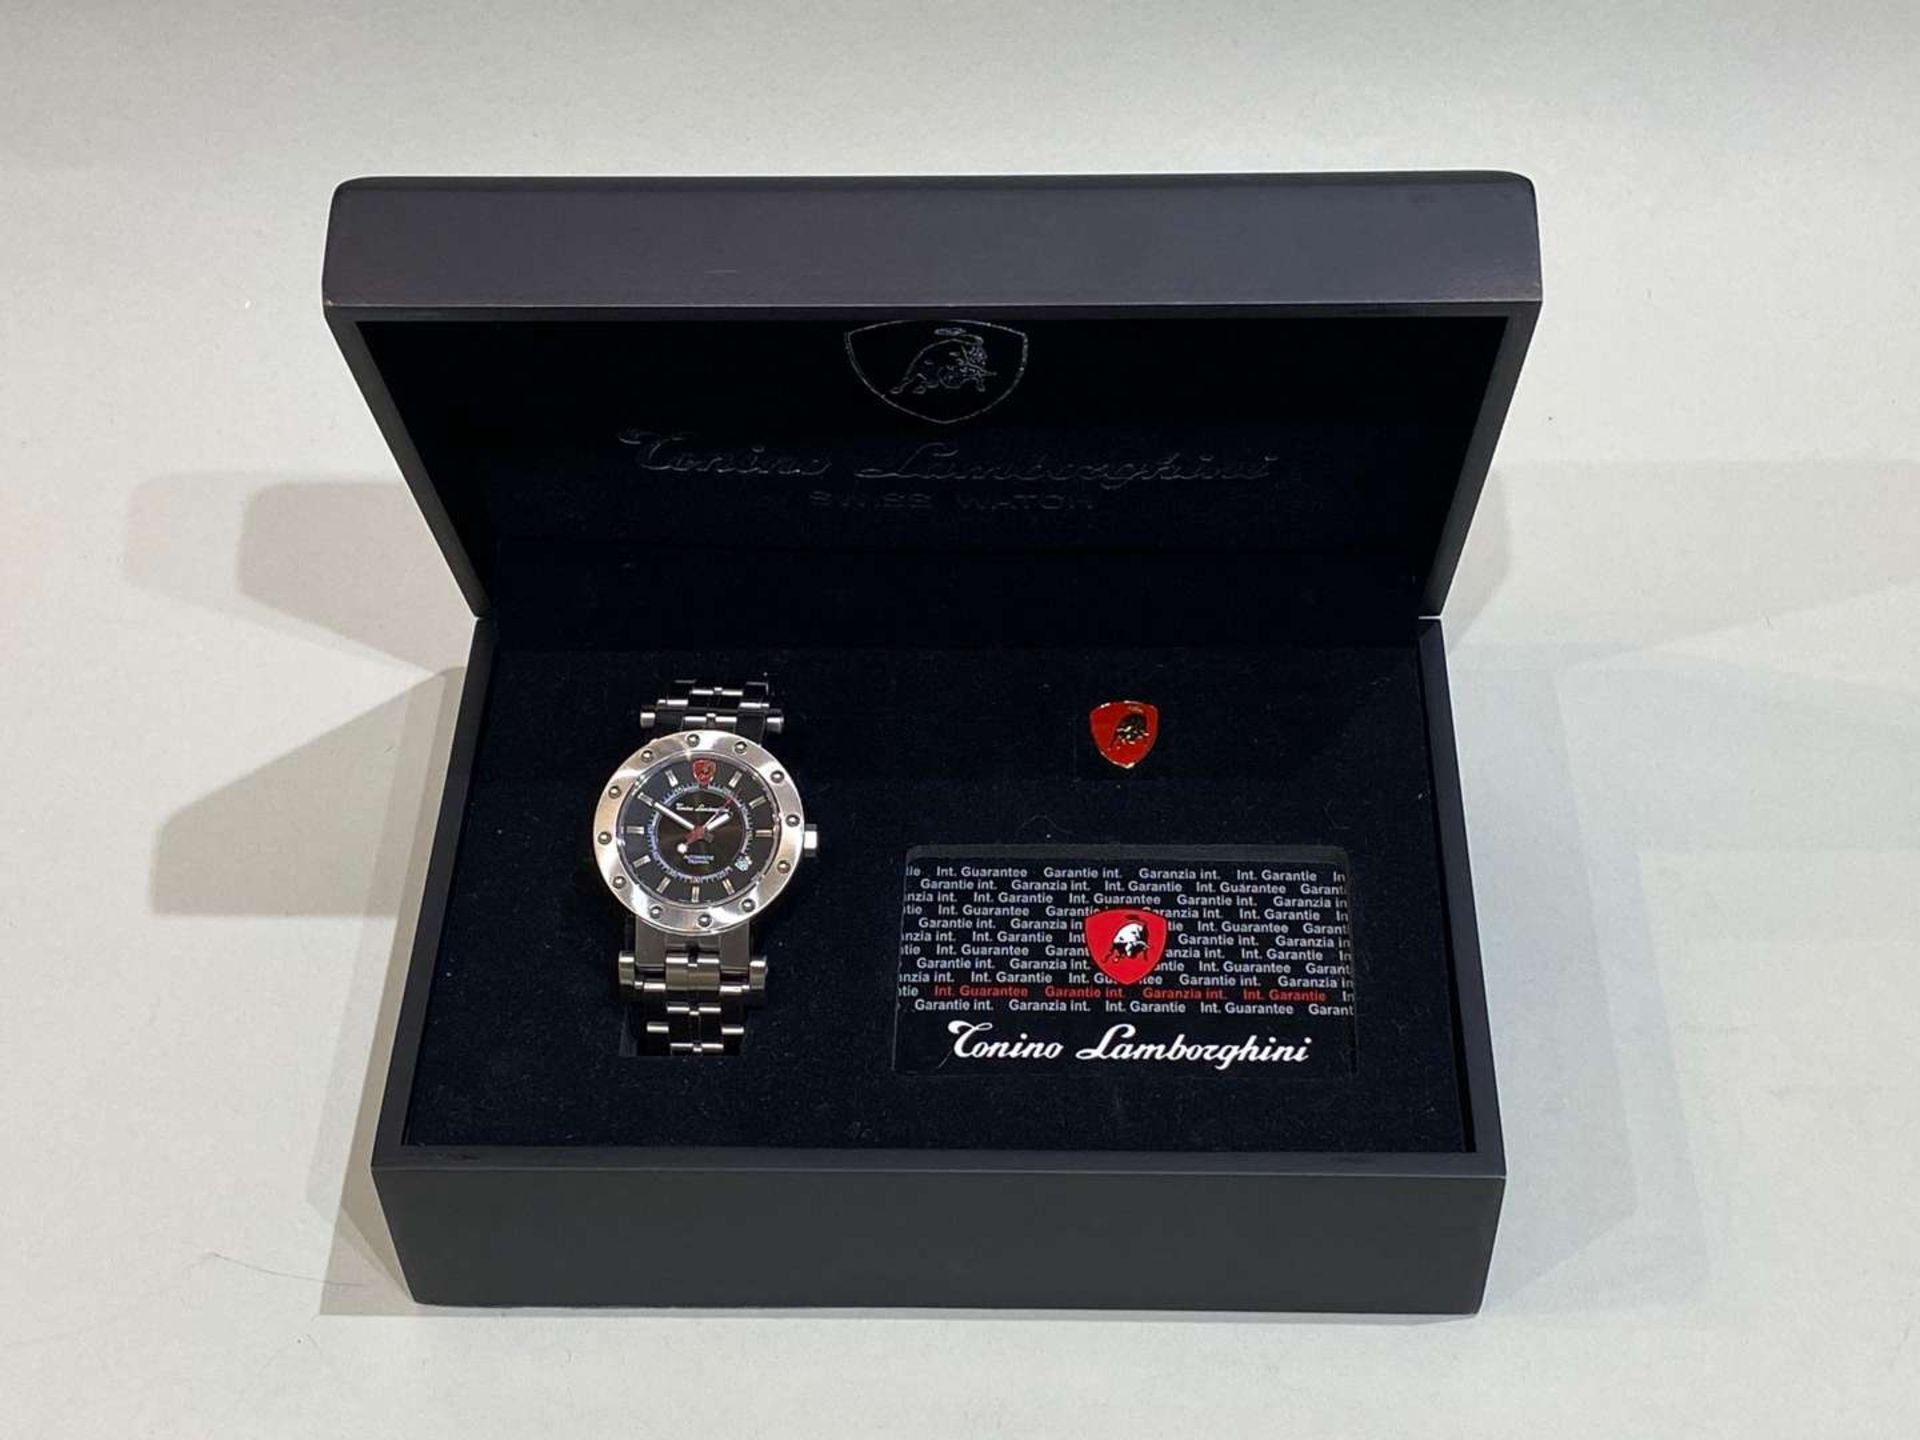 TONINO LAMBORGHINI, FERRUCCIO 2000, a stainless steel, automatic, centre seconds, calendar watch, - Image 6 of 10